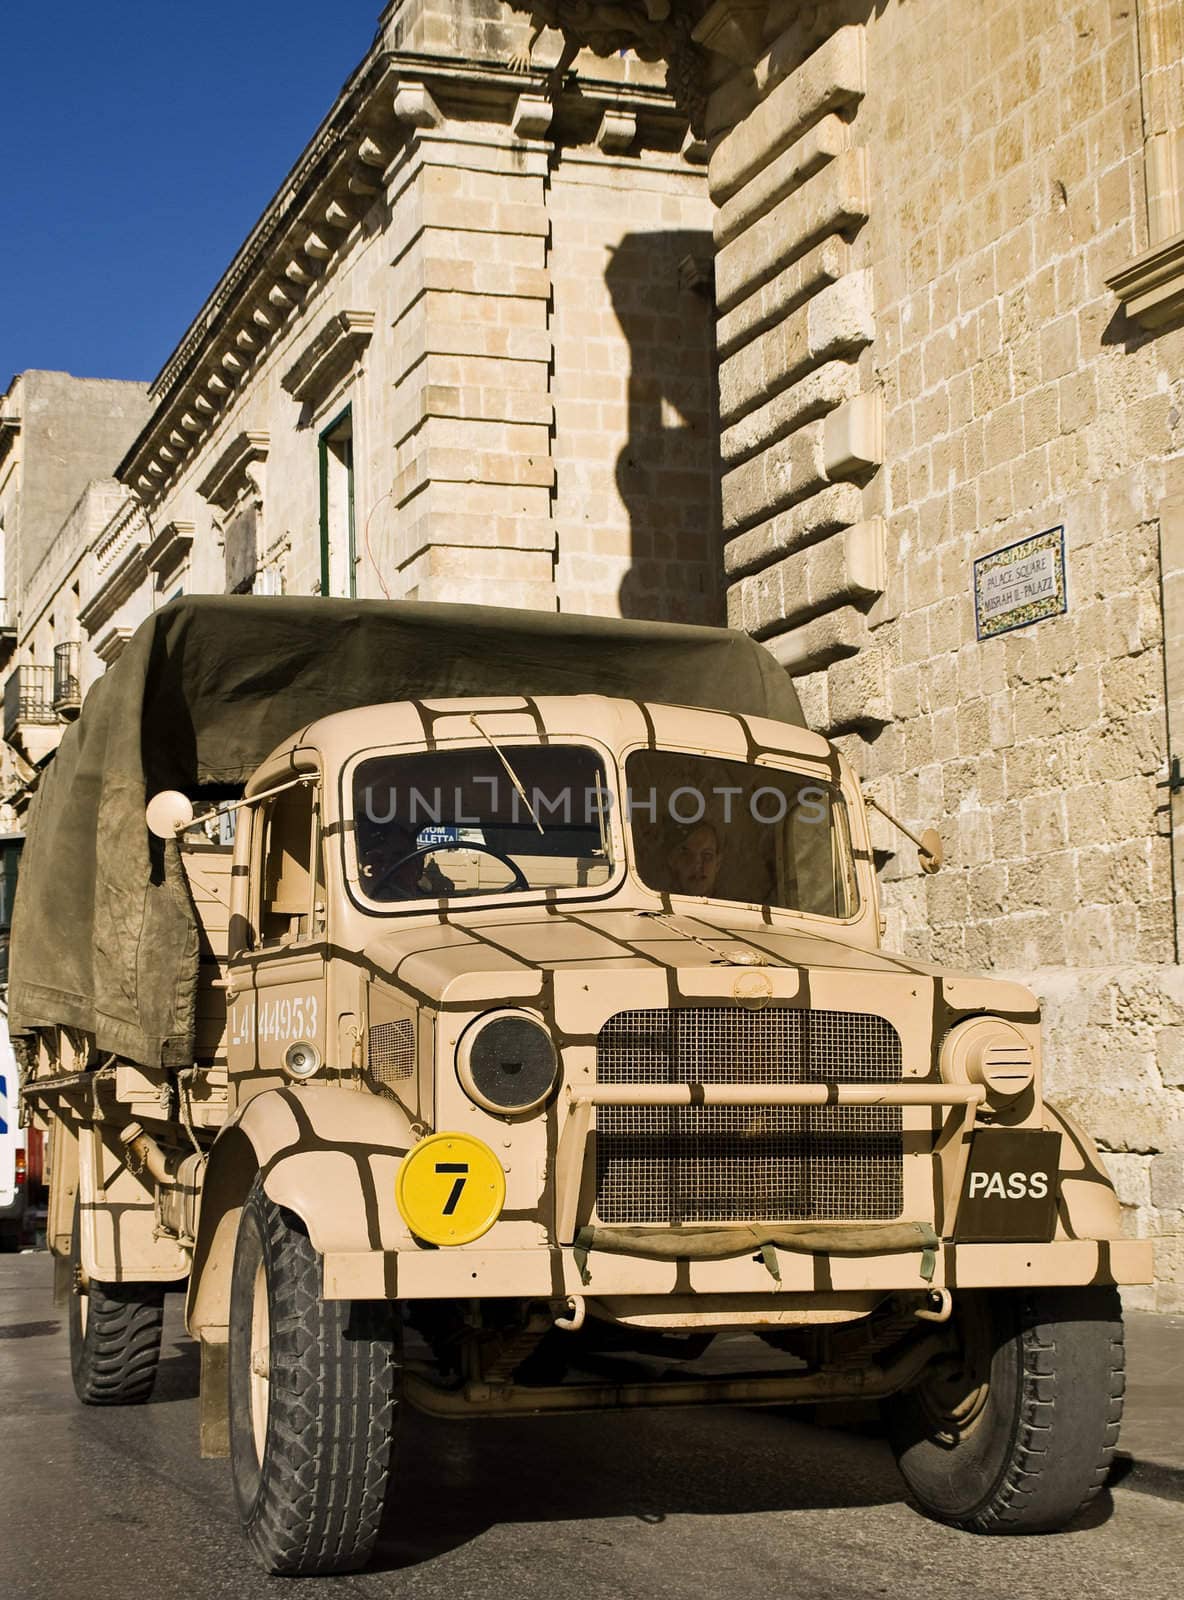 Authentic and unique World War II truck in Malta